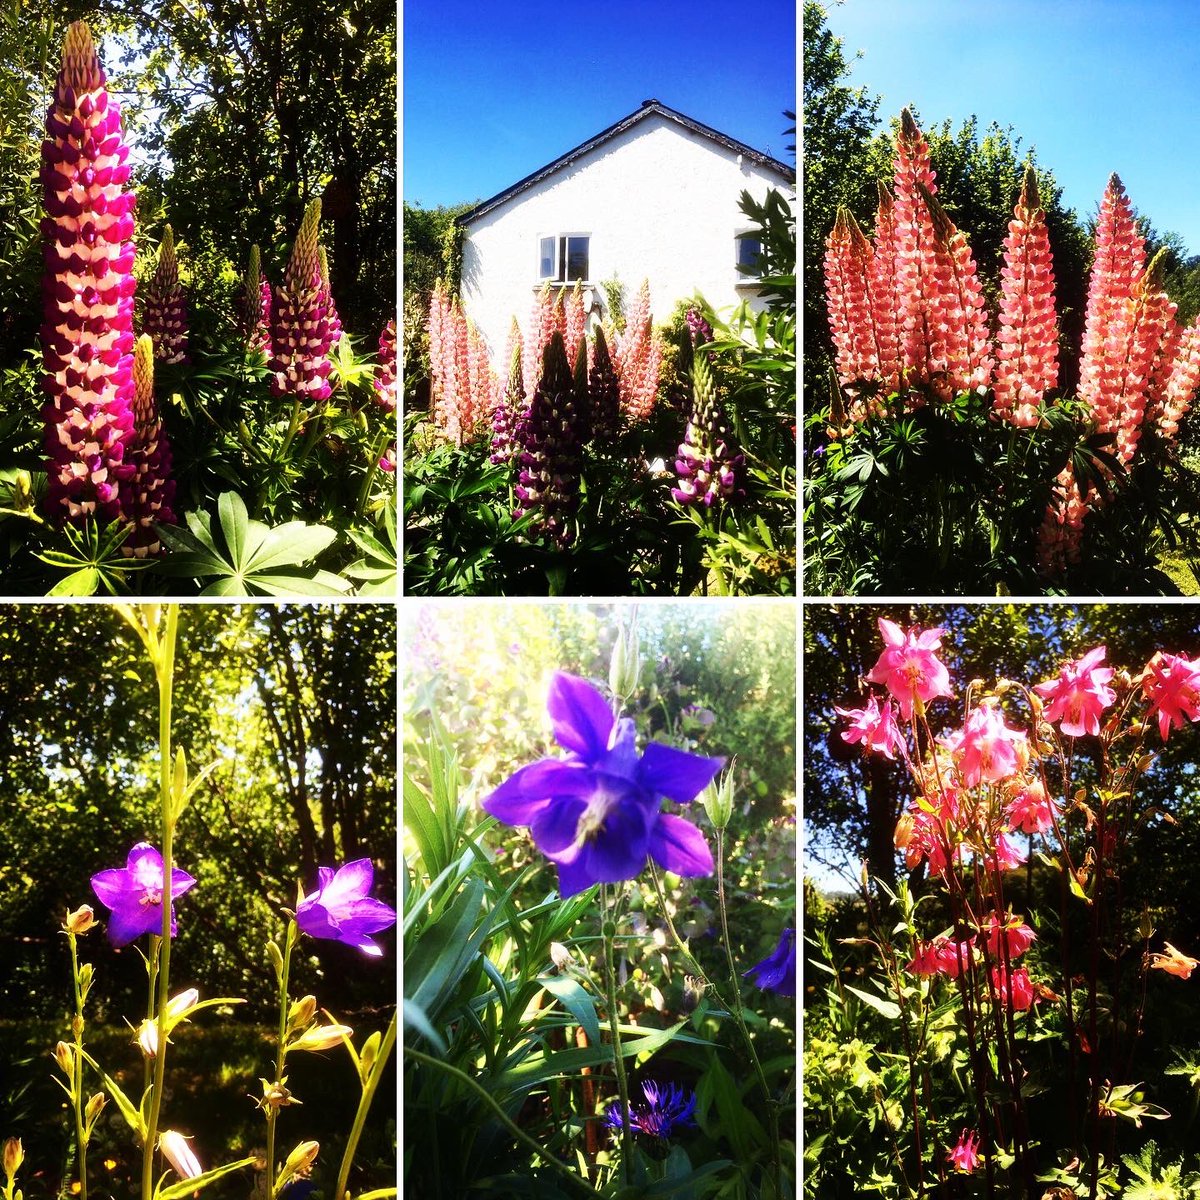 Loving the Garden colours! #lupin #gardenvibe #liveauthentic #visualsoflife #splendid_flowers #thefloralseasons #raw_allnature #GardenersWorld #garden #outdoorphotography #naturepotd #ruralescape #ruralliving #nature_perfection #BeautyOfNature @theacornhut @BeaconsPhotos @Airbnb